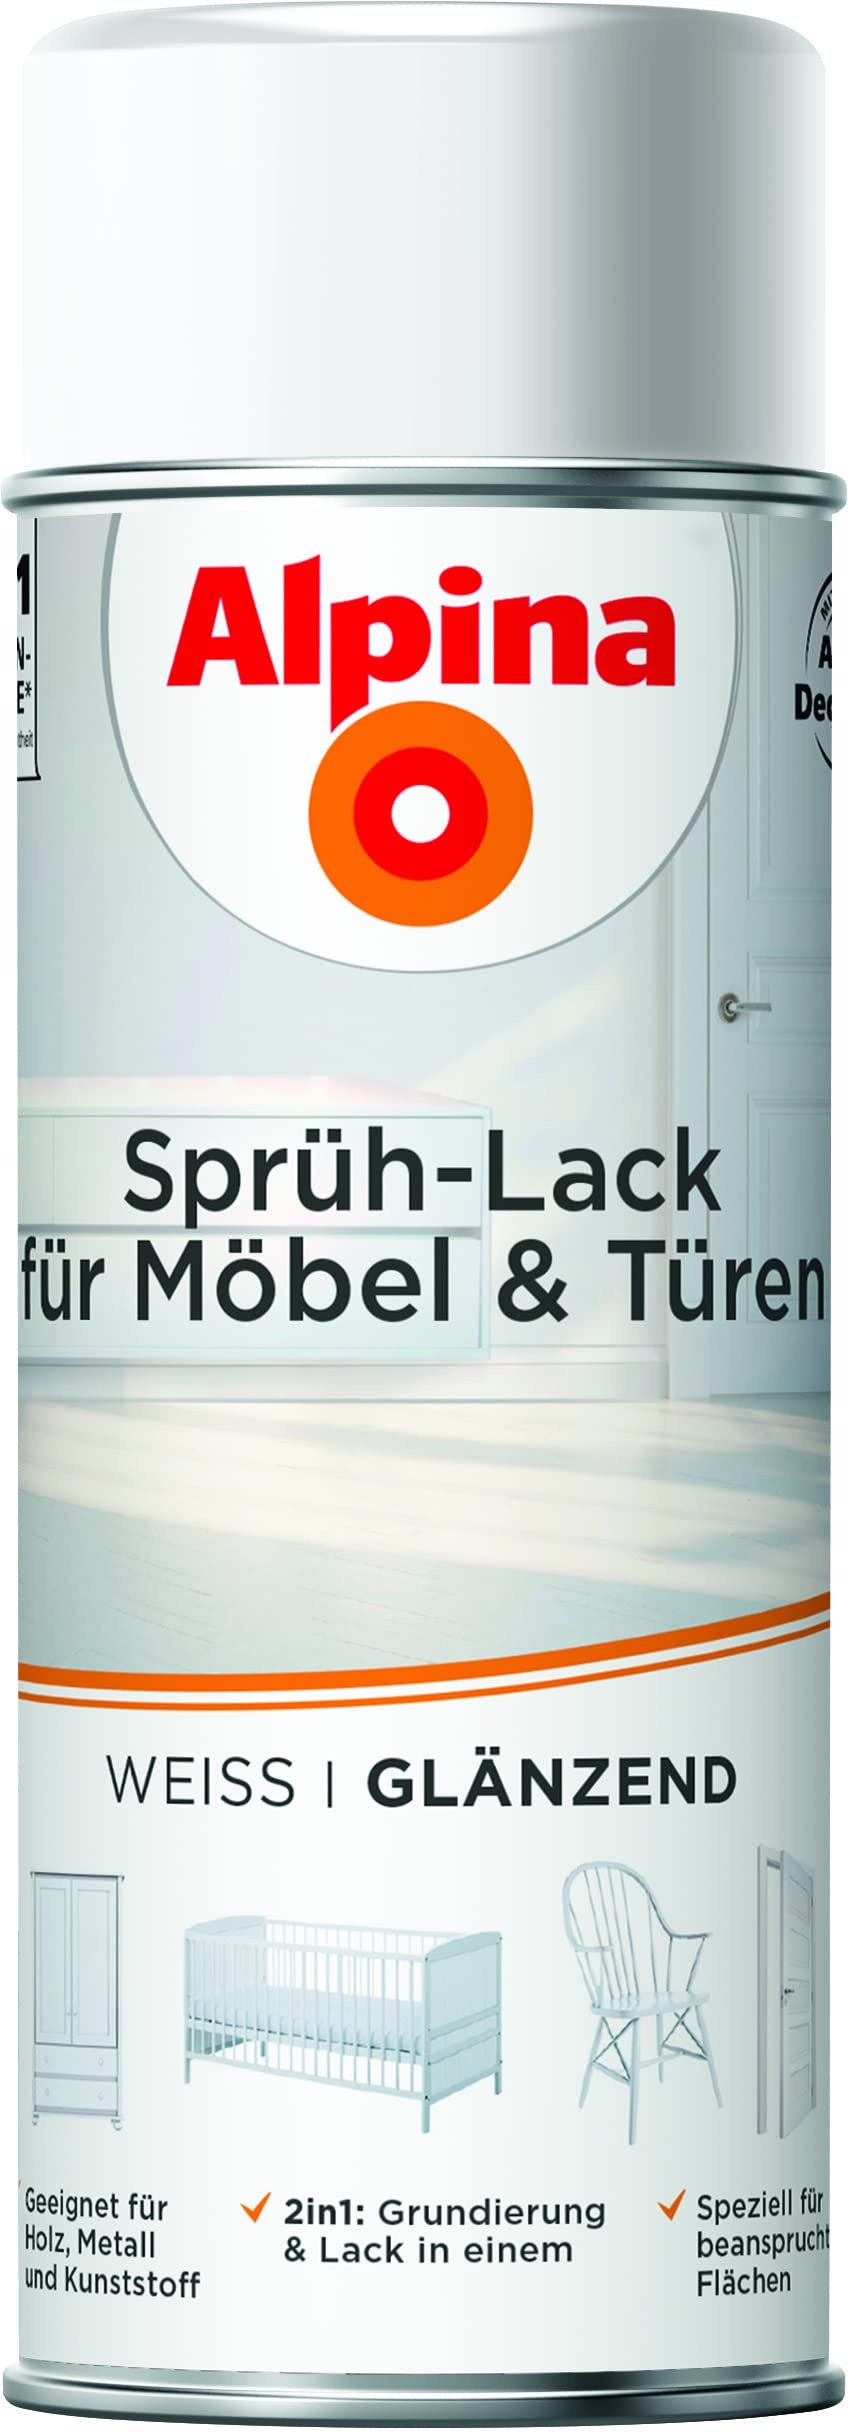 Alpina Sprüh-Lack für Möbel & Türen 400ml glänzend